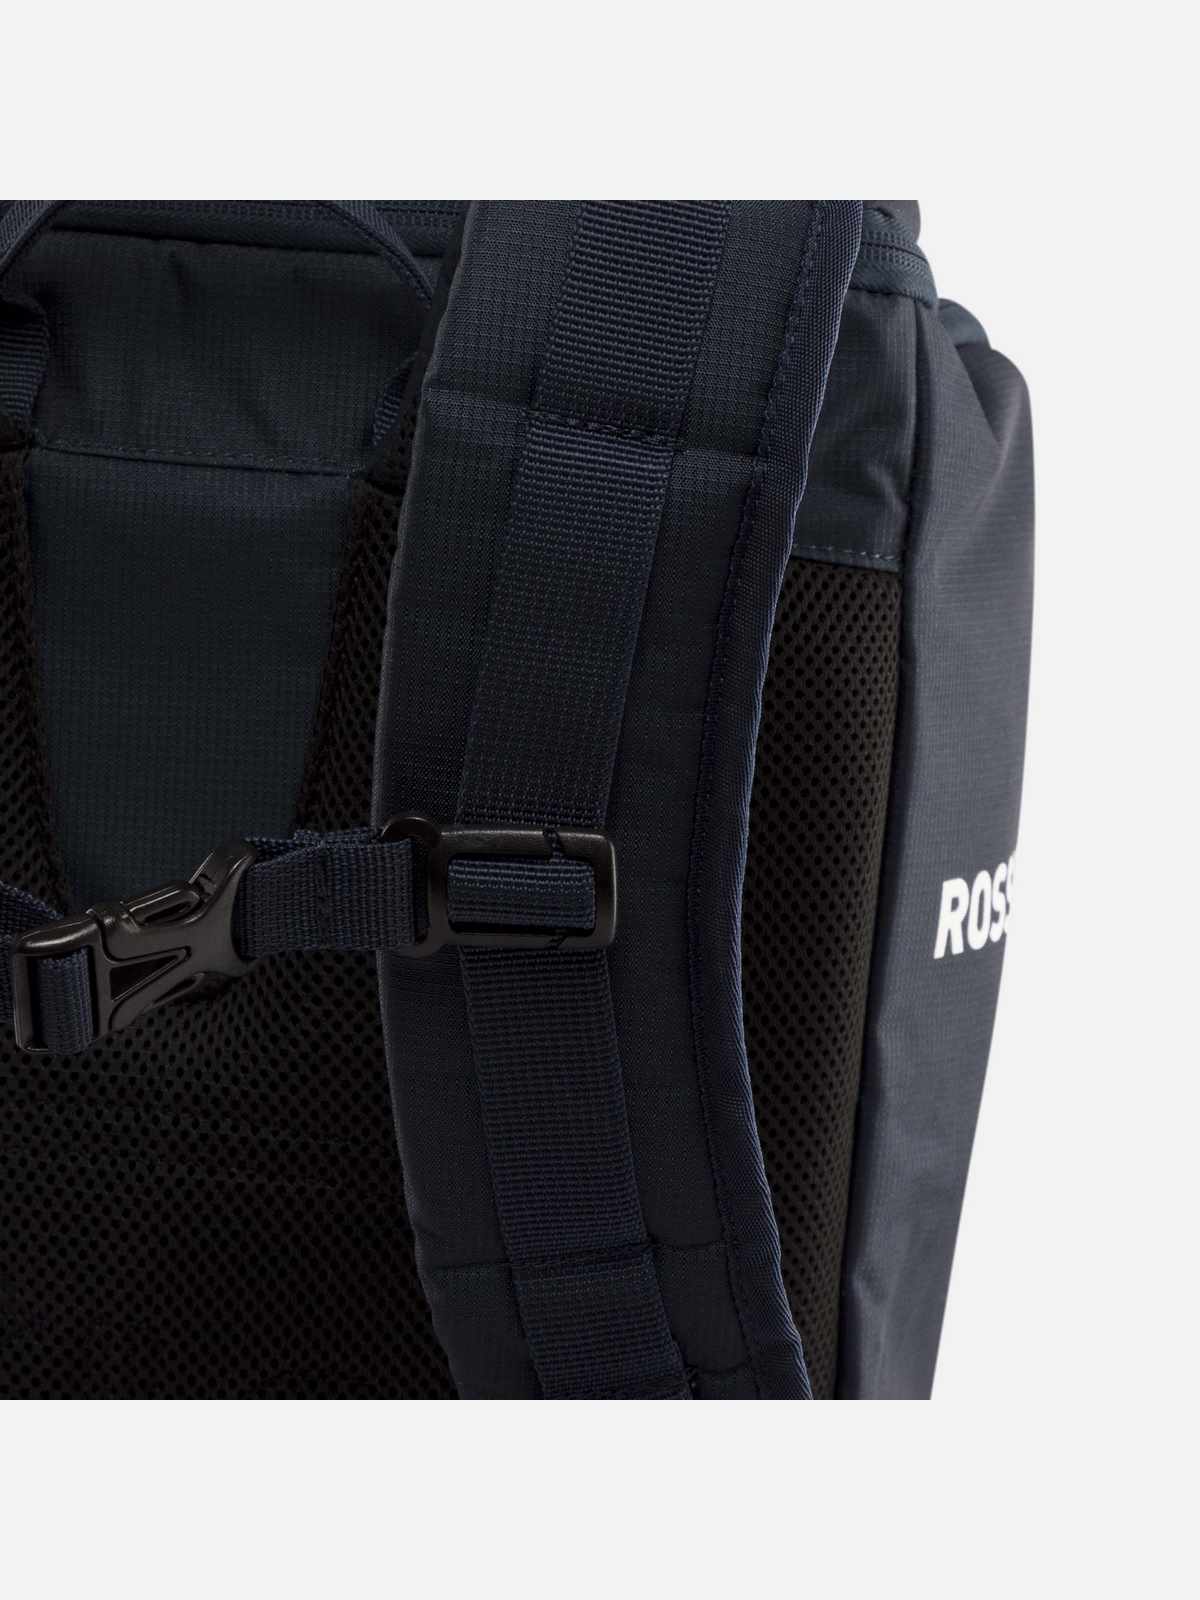 Plecak na buty narciarskie ROSSIGNOL STRATO COMPACT BOOT BAG